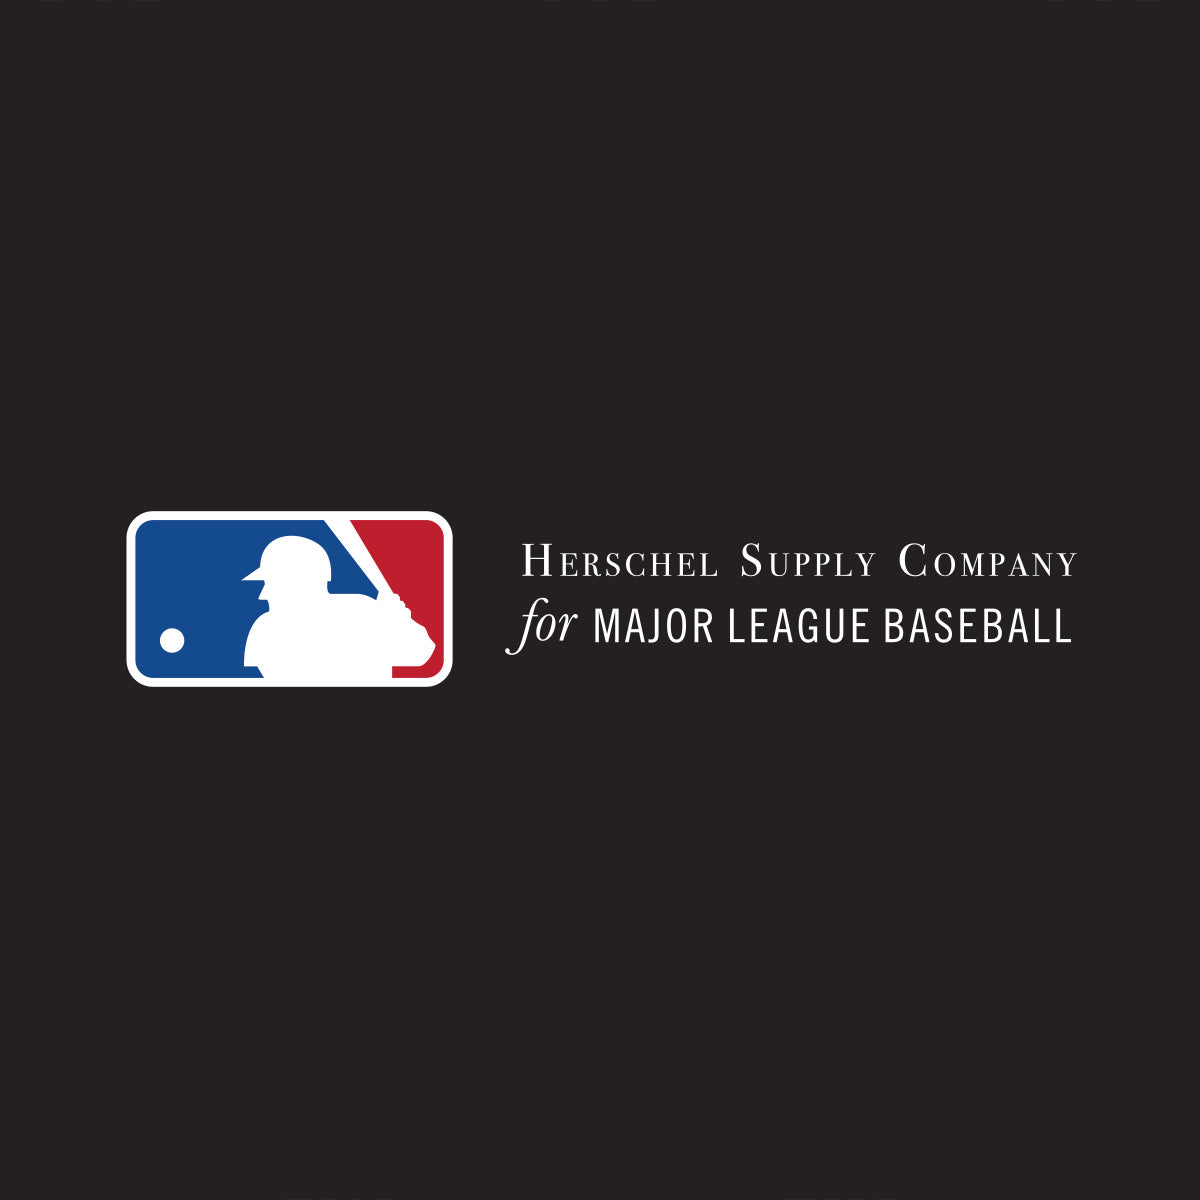 Herschel Supply Company for Major League Baseball